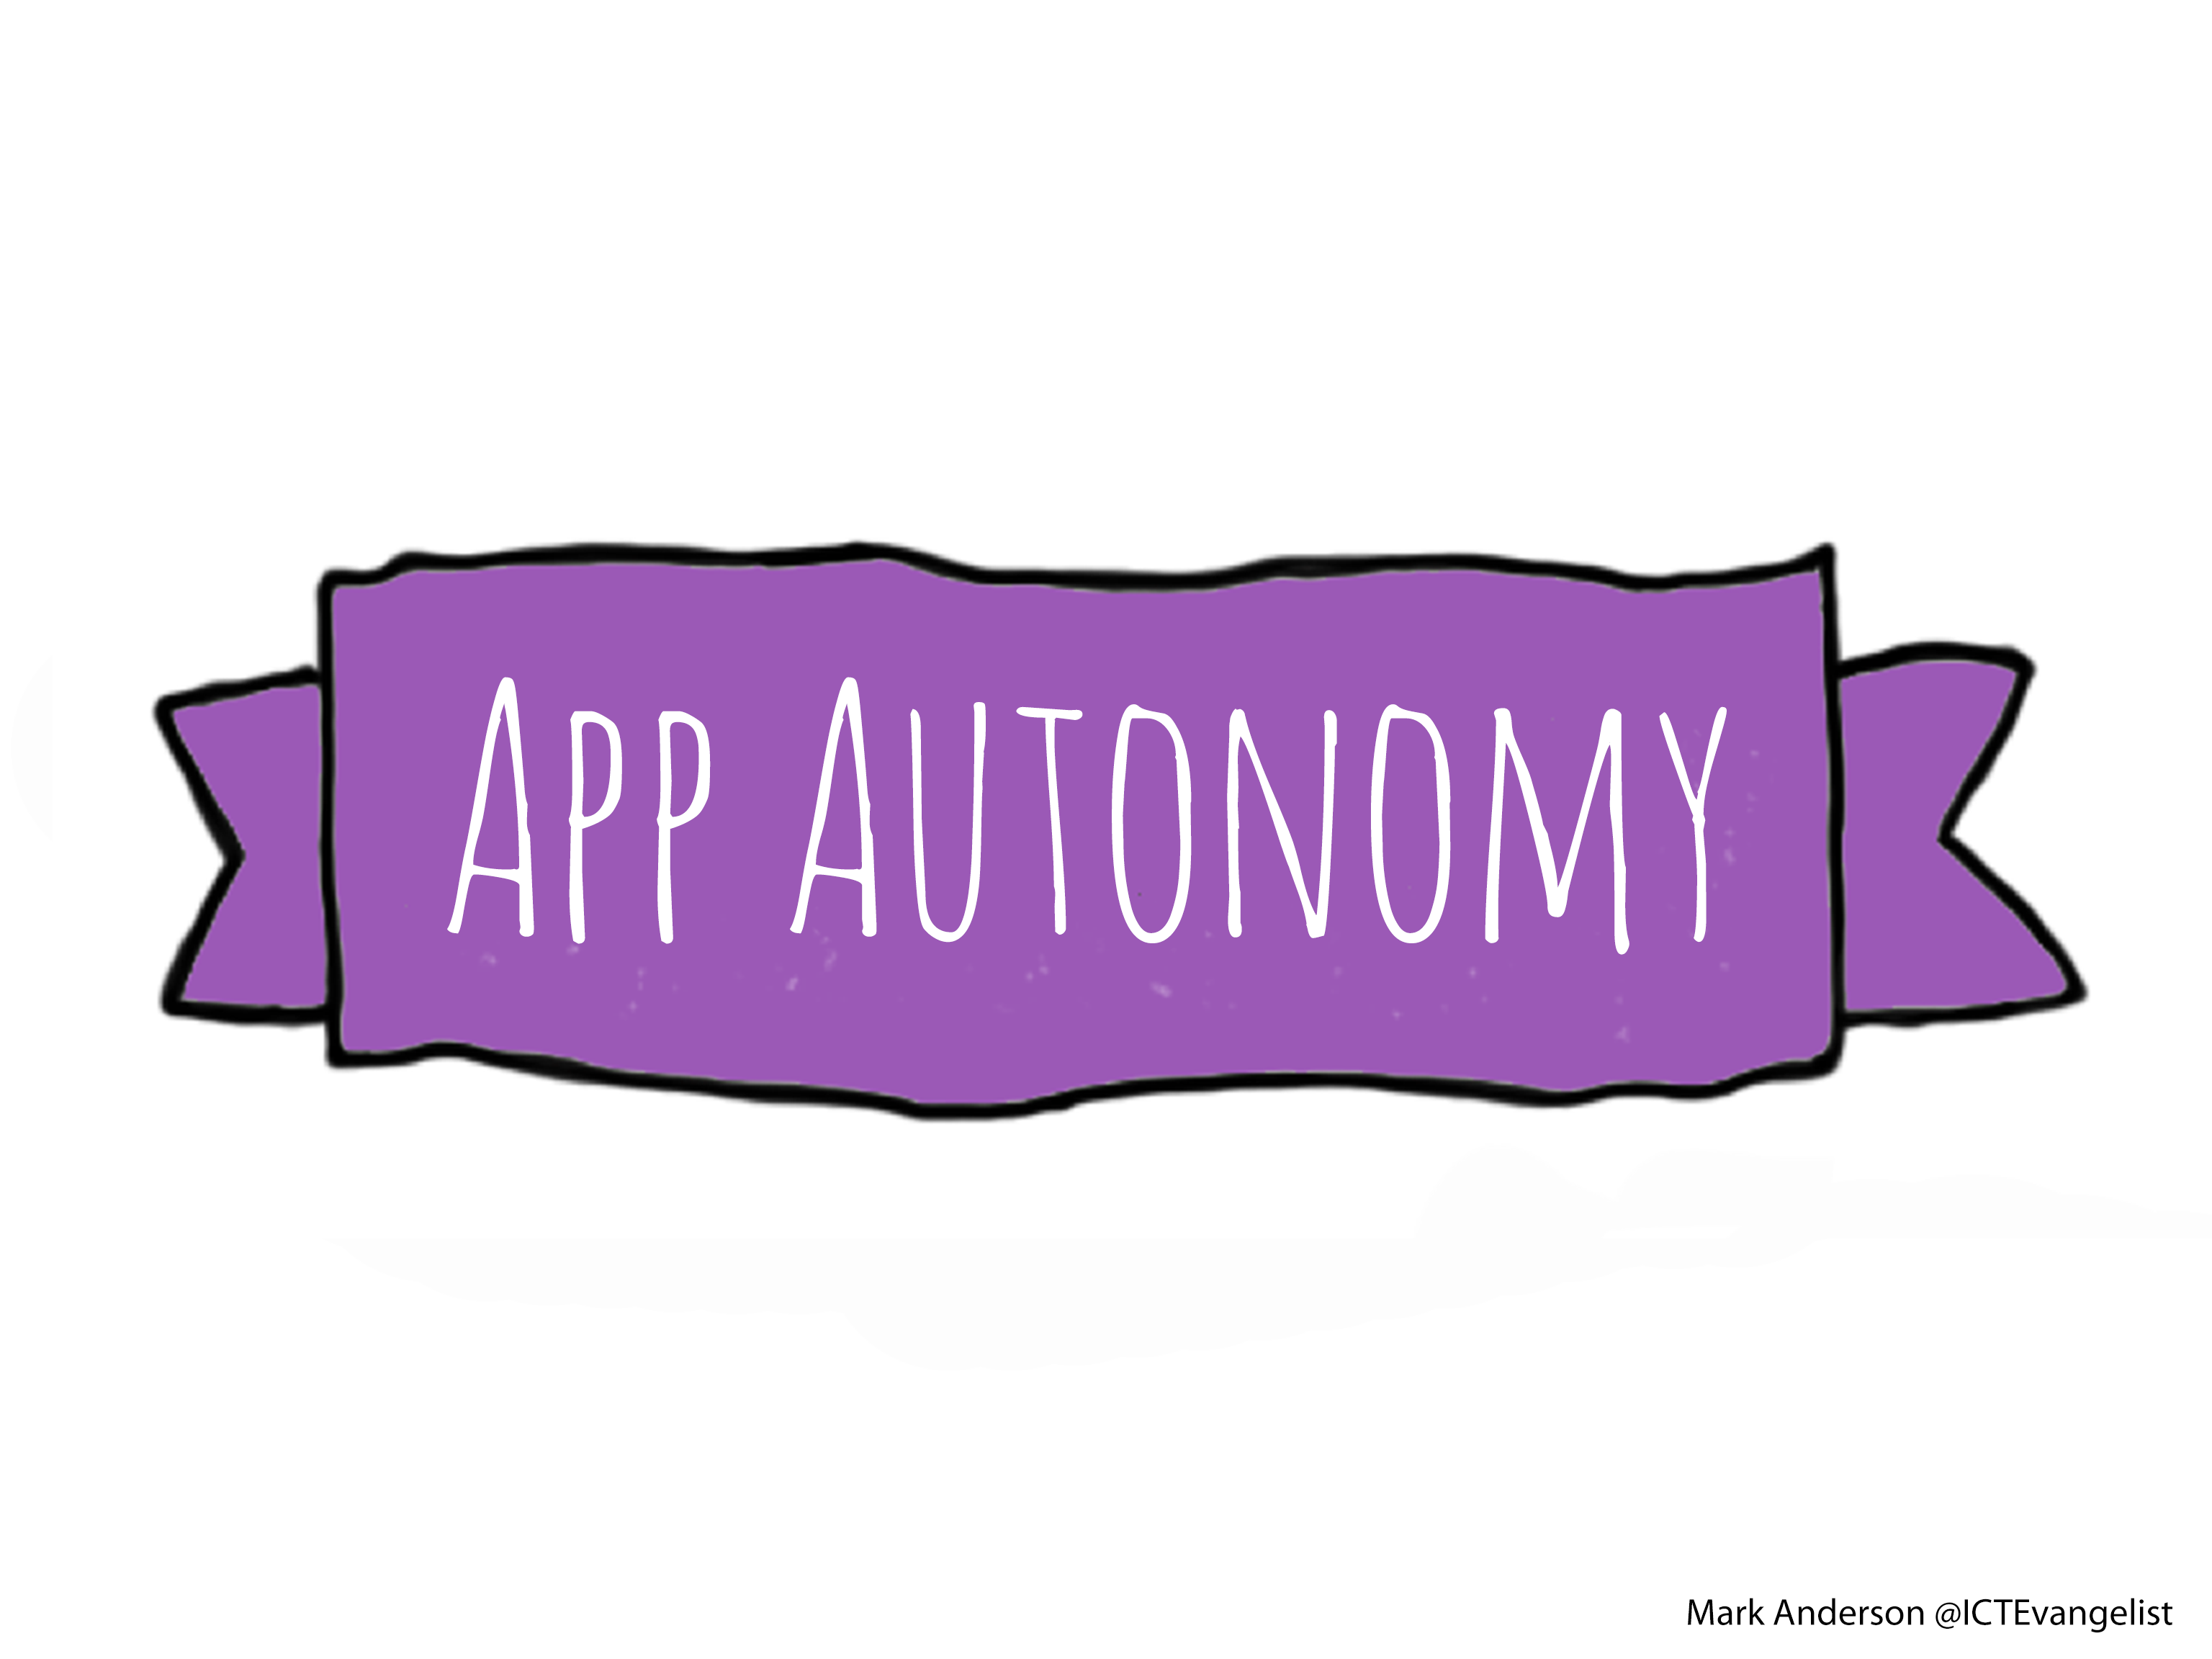 ipad 3d brain app autonomy